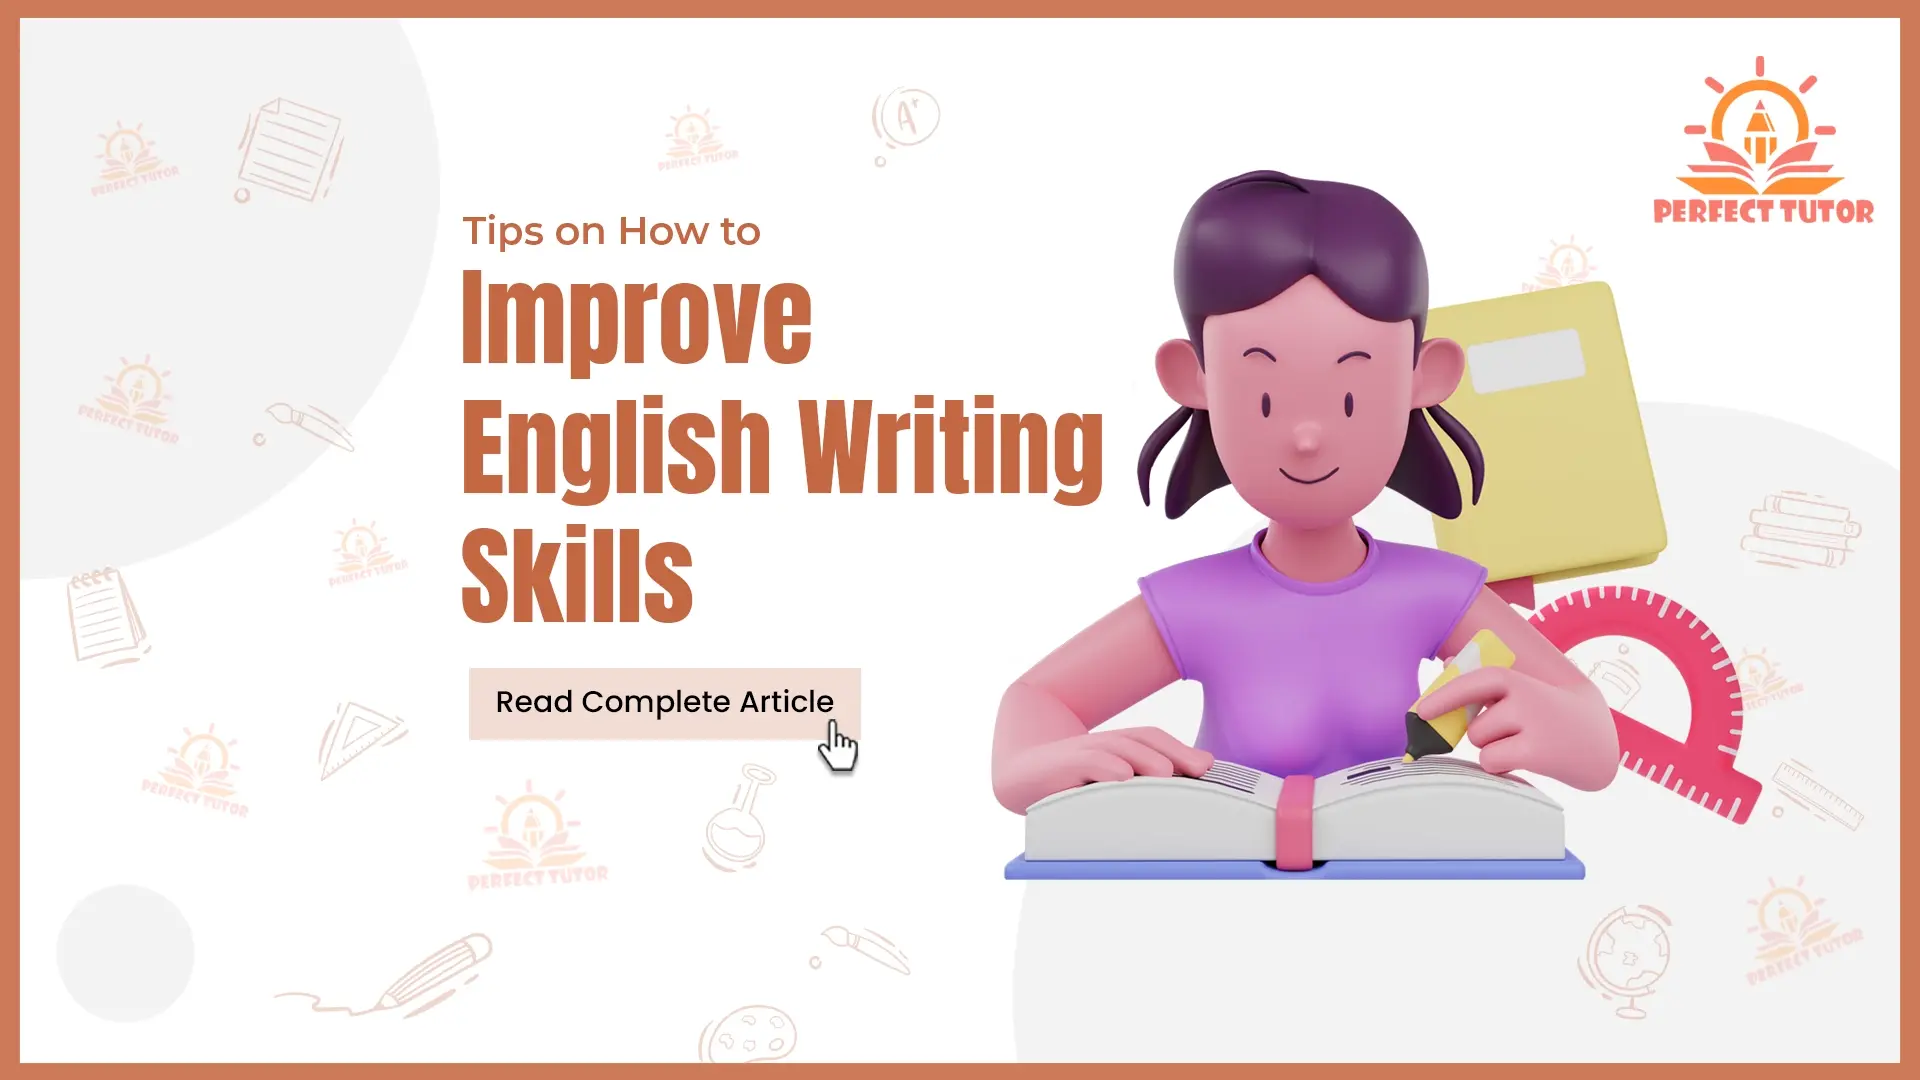 Improve English writing skills